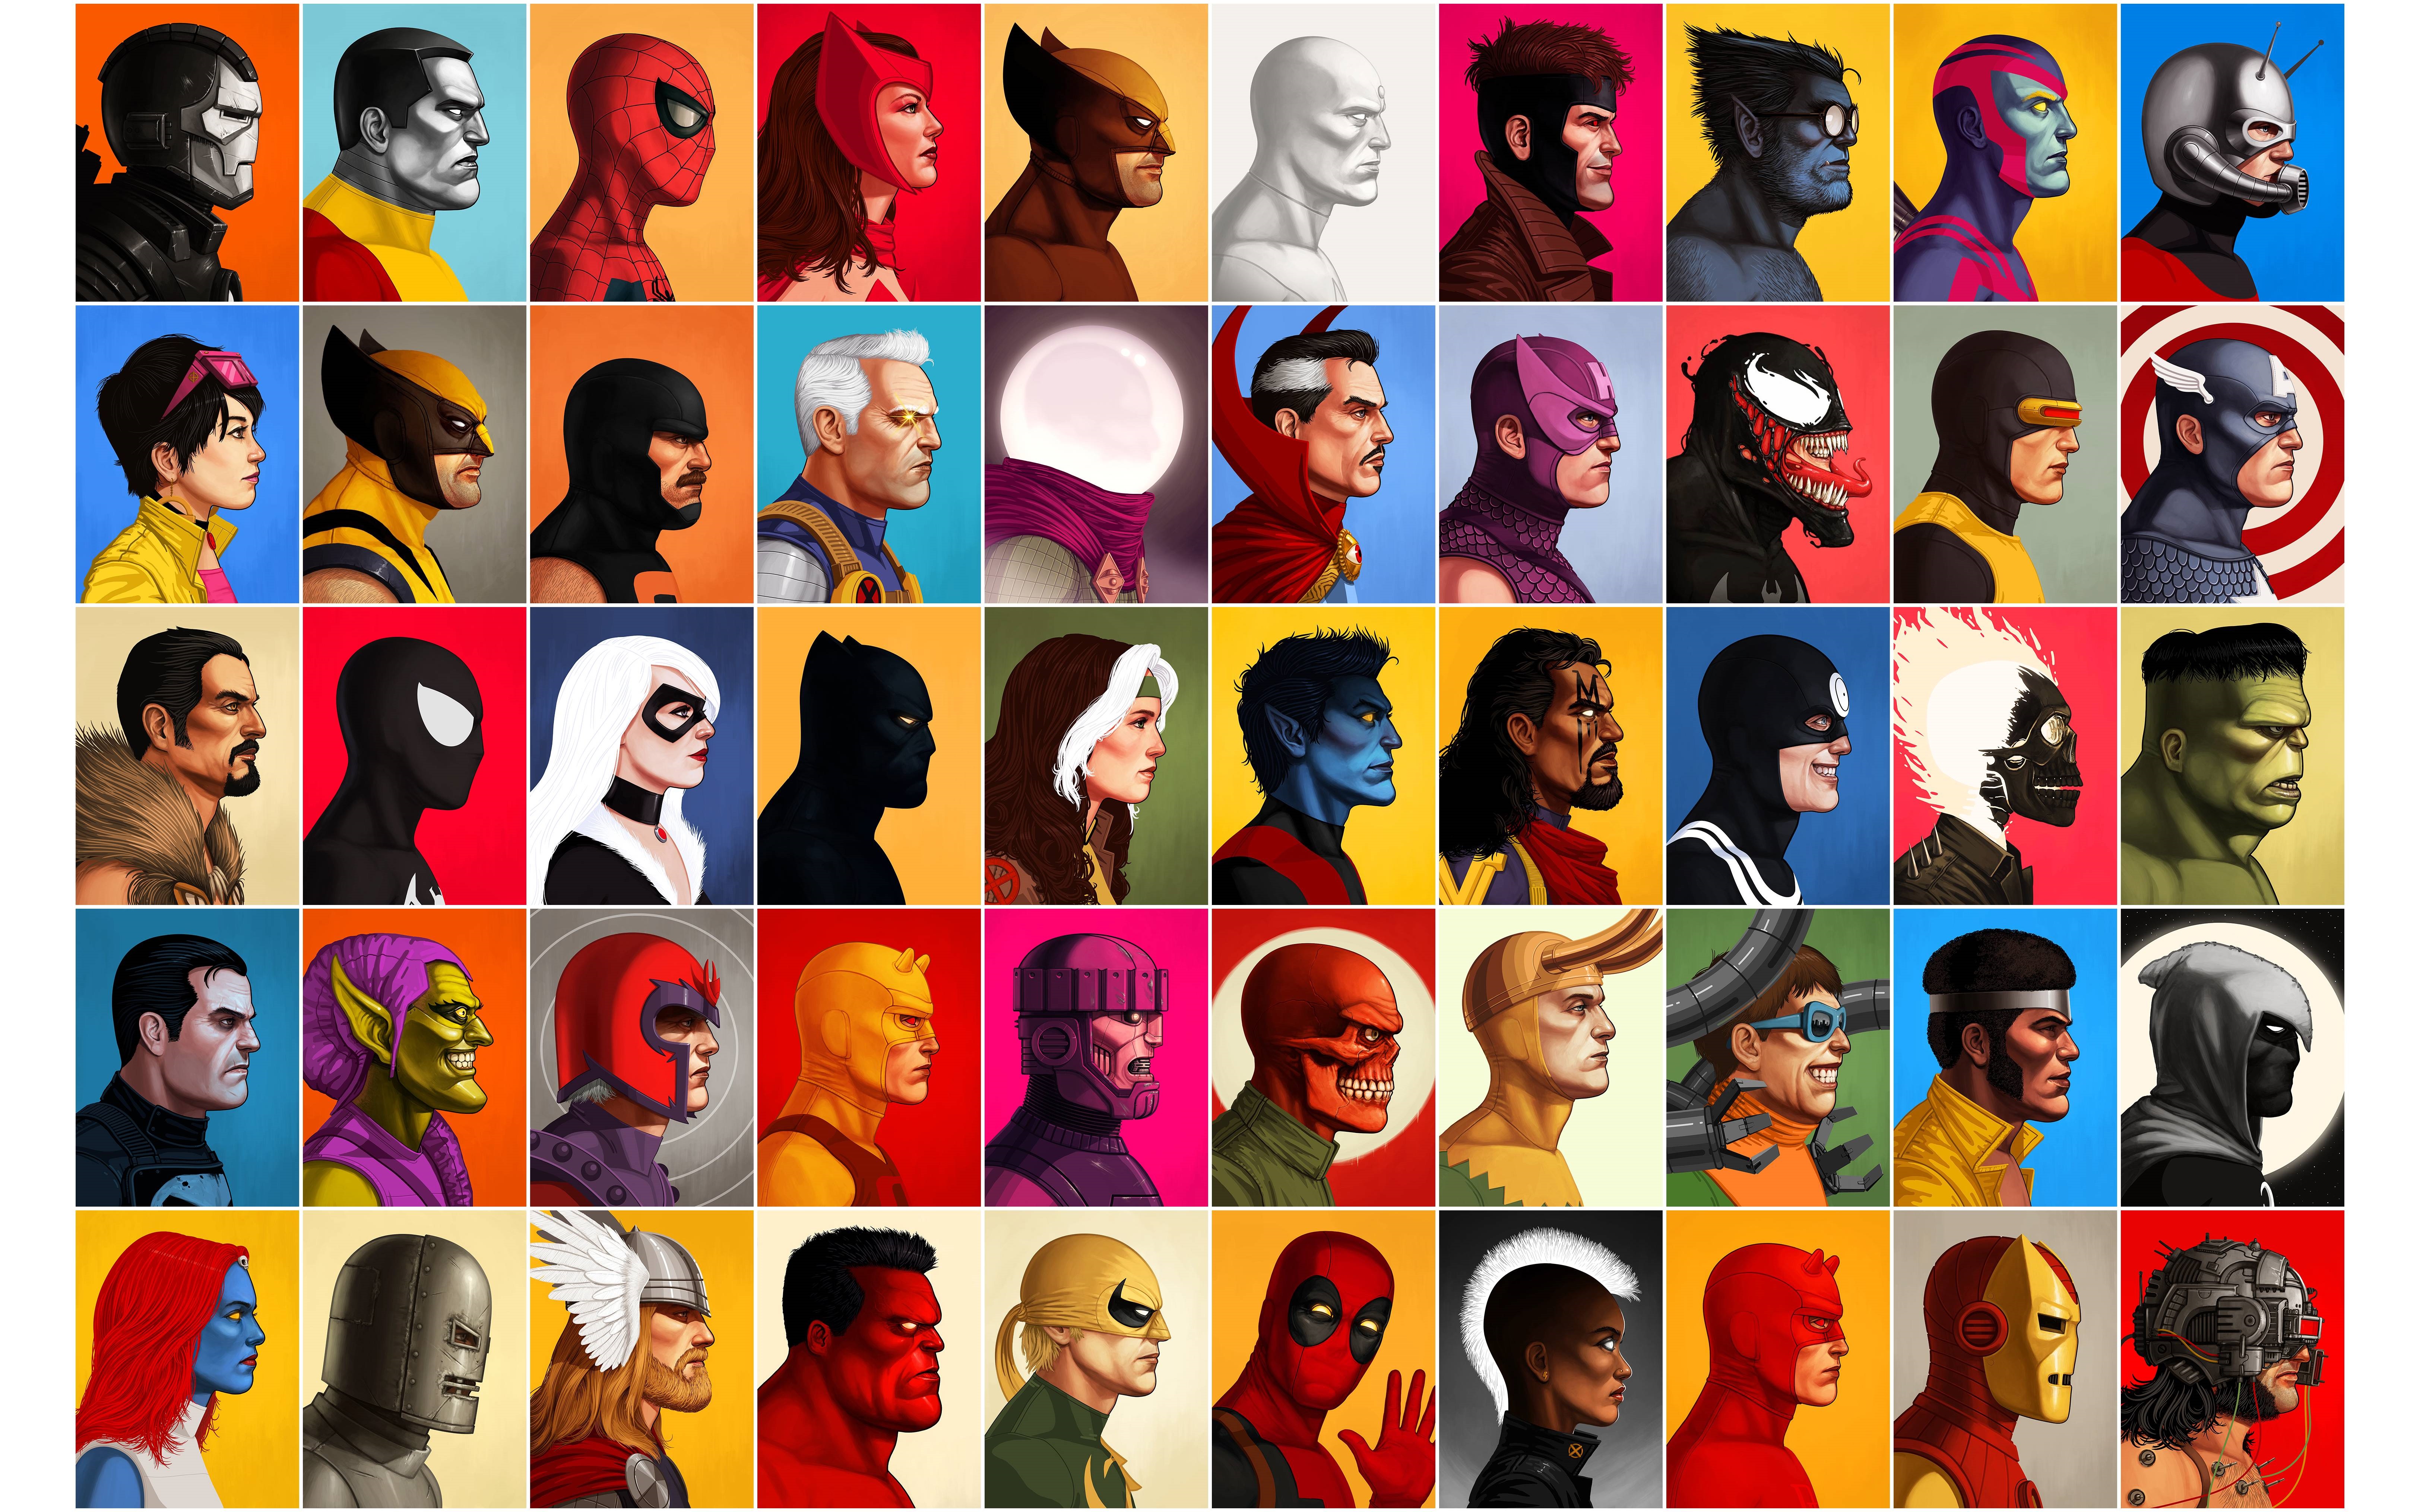 deadpool, daredevil, spider man, hulk, bullseye (marvel comics), cable (marvel comics), puck (marvel comics), wolverine, collage, archangel (marvel comics), loki (marvel comics), scarlet witch, black panther (marvel comics), comics, ant man, beast (marvel comics), black cat (marvel comics), captain america, clint barton, colossus, cyclops (marvel comics), doctor octopus, doctor strange, galactus, gambit (marvel comics), green goblin, hawkeye, iron fist (marvel comics), iron man, jubilee (marvel comics), magneto (marvel comics), moon knight, mystique (marvel comics), nightcrawler (marvel comics), punisher, red hulk, red skull (marvel comics), rogue (marvel comics), silver surfer, storm (marvel comics), thor, venom, war machine, weapon x (marvel comics) wallpaper for mobile